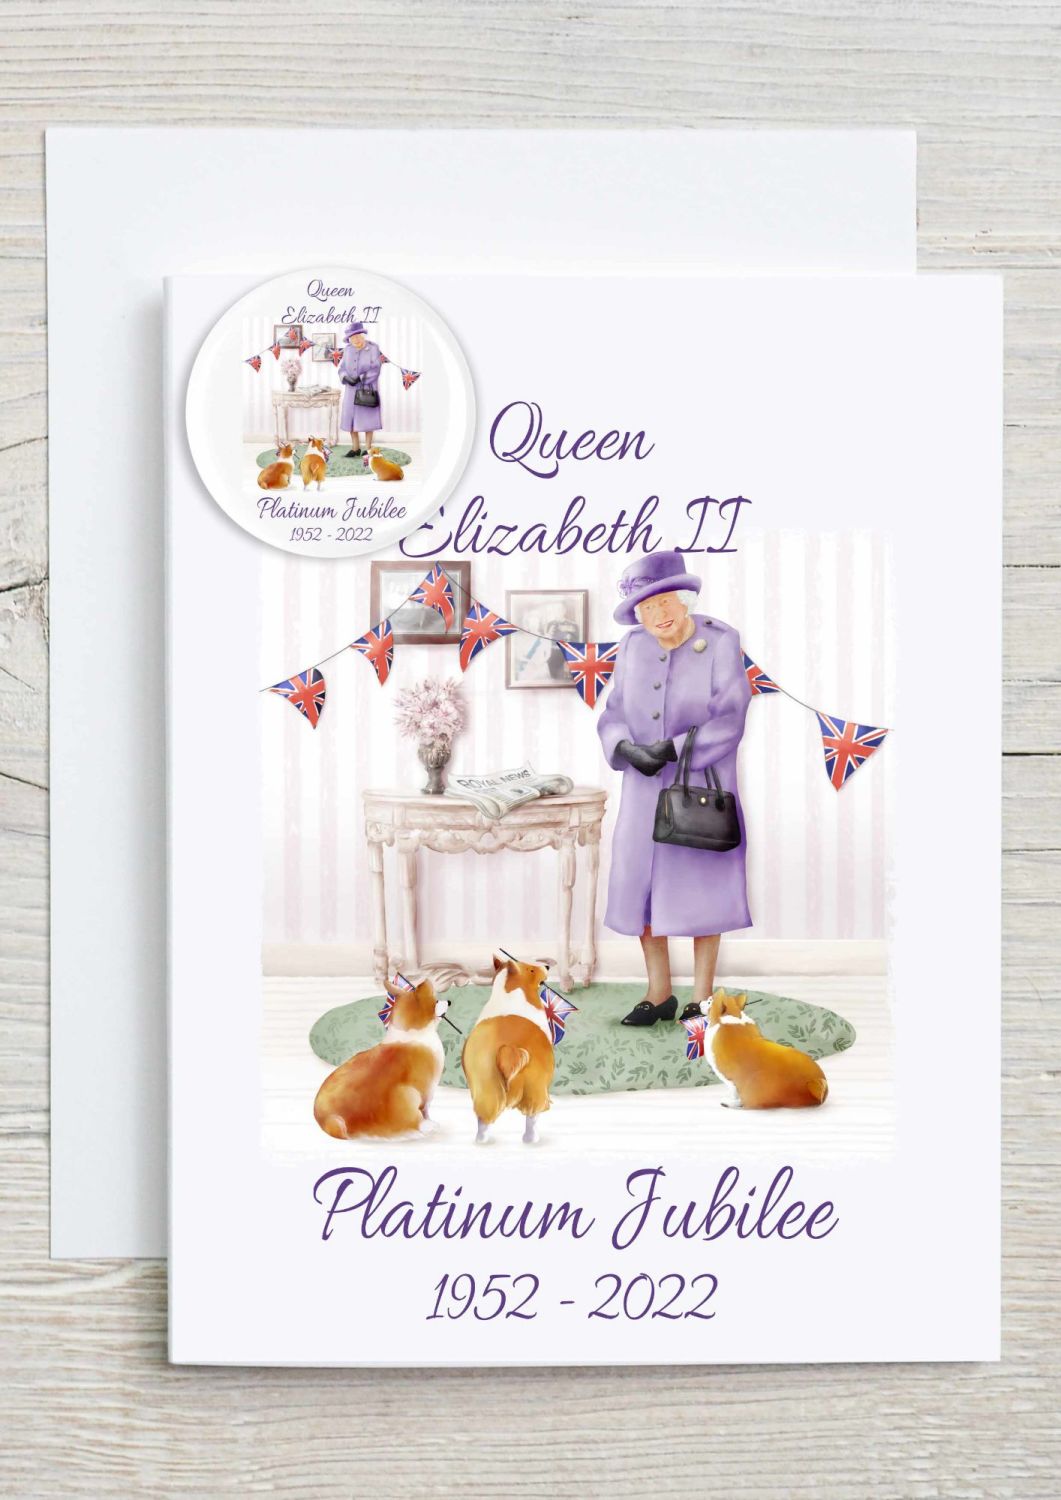 Queen Elizabeth II CARD & BADGE - Platinum Jubilee Celebration of 70 Years 